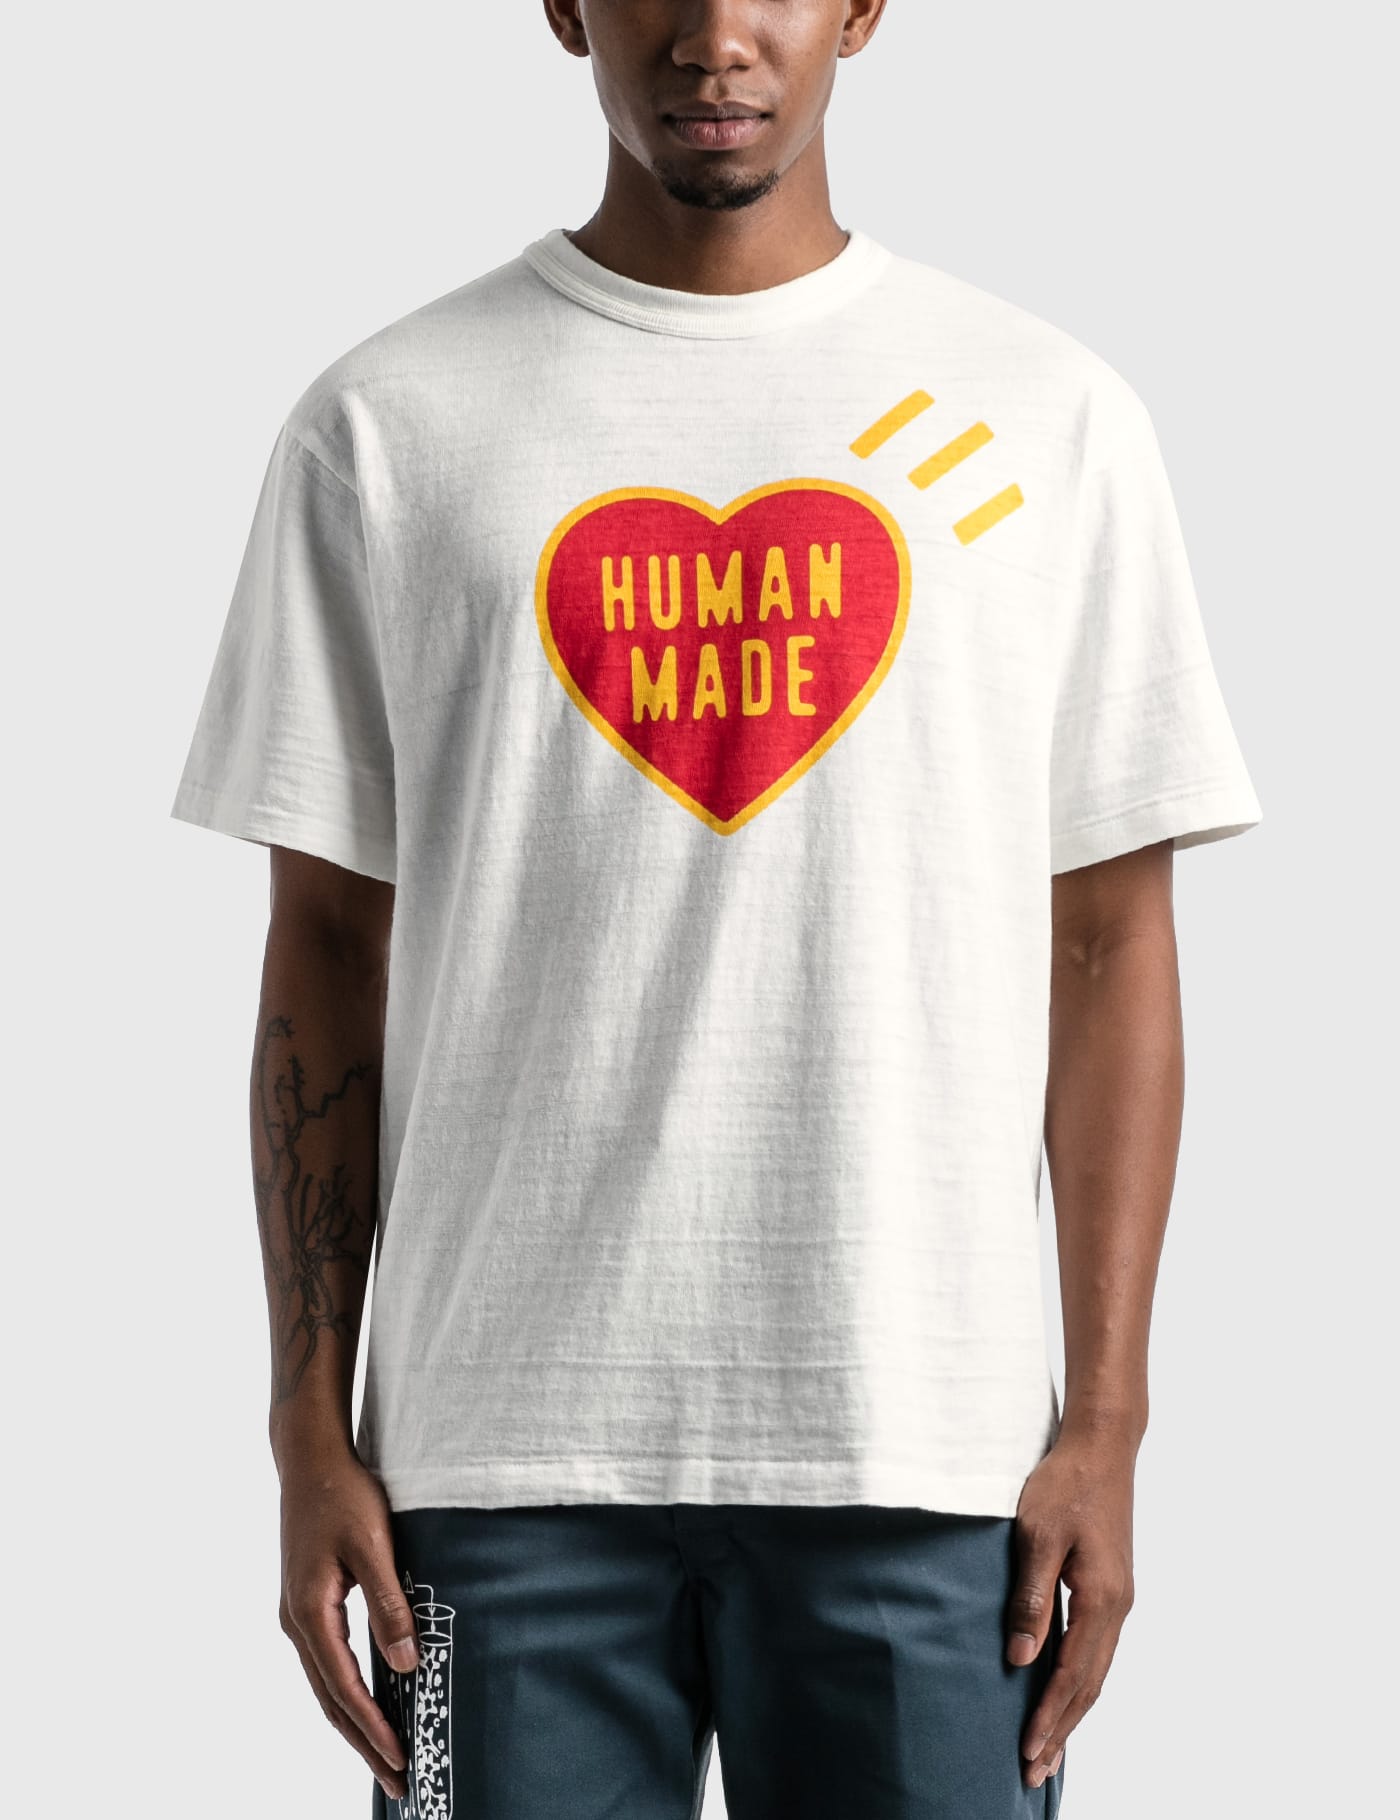 Human Made - T-Shirt #2026 | HBX -  ハイプビースト(Hypebeast)が厳選したグローバルファッション&ライフスタイル